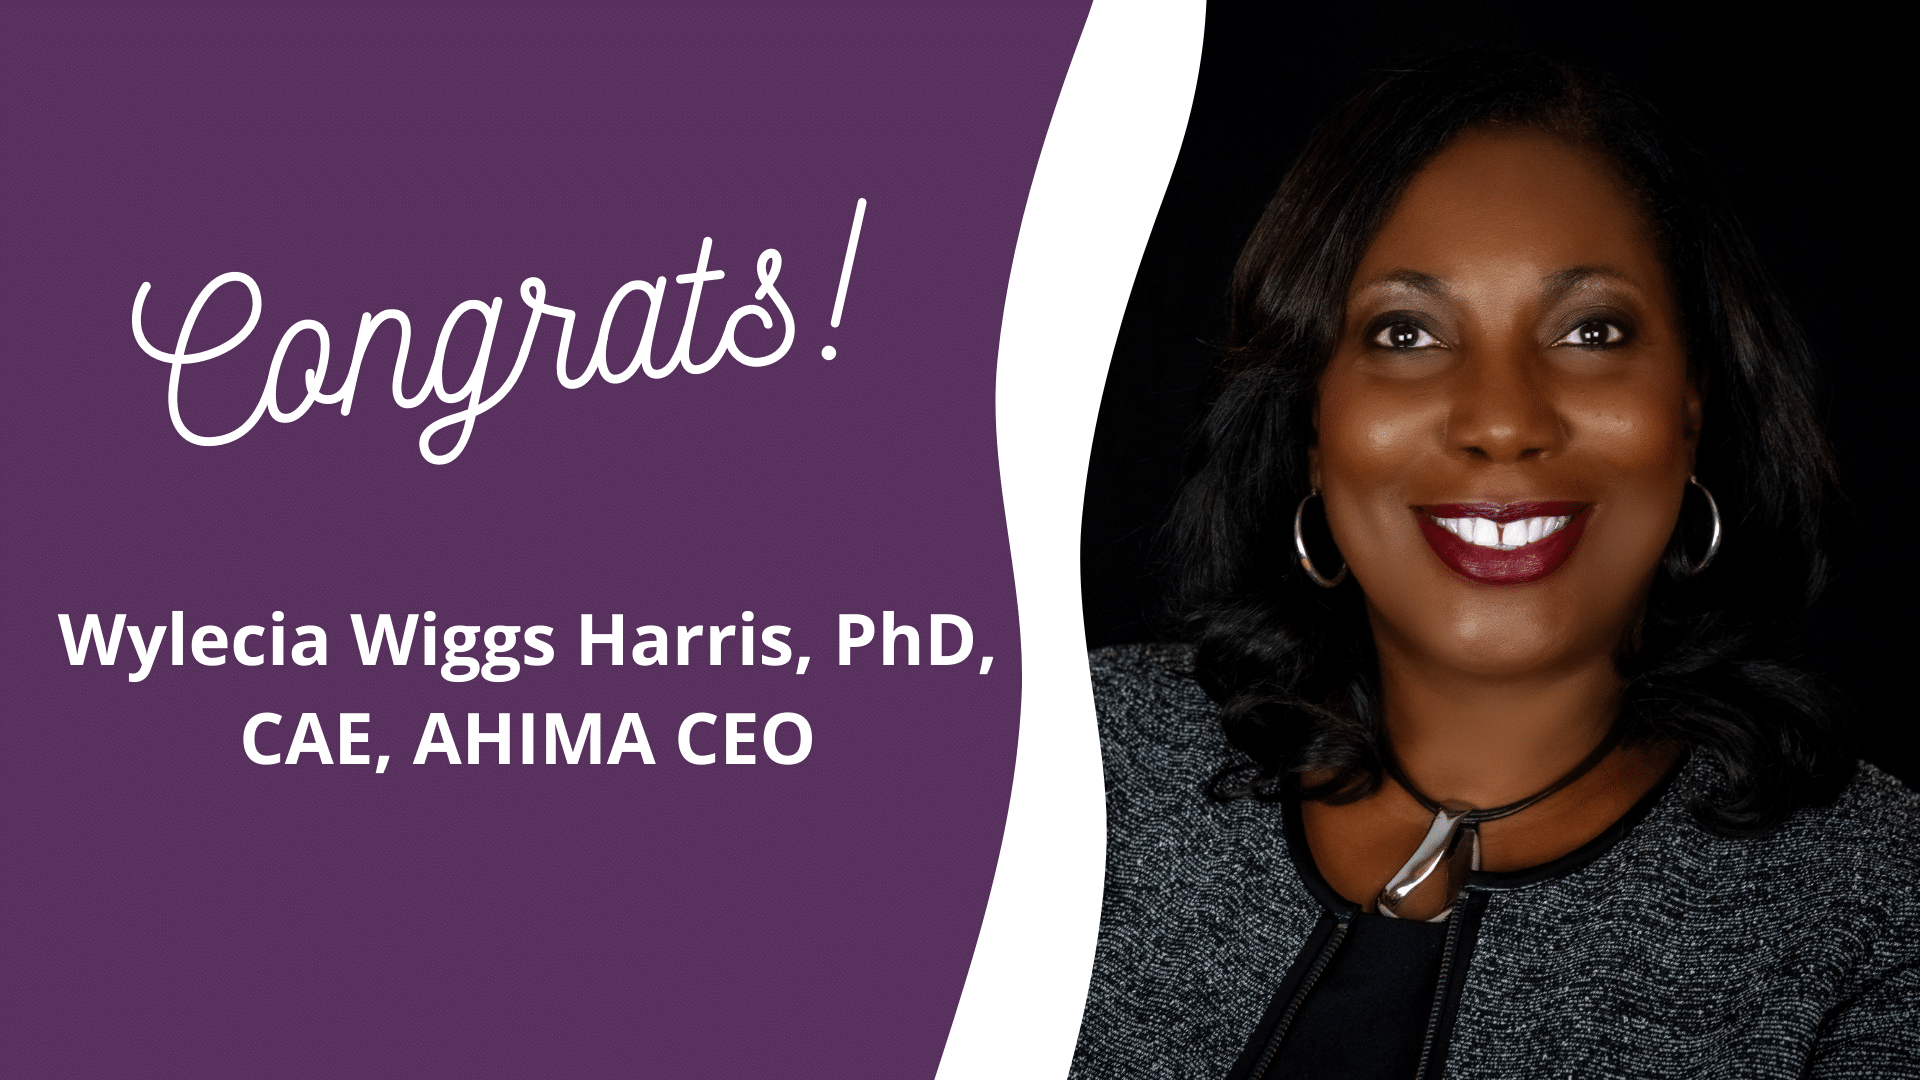 AHIMA CEO Named Modern Healthcare Top Women Leaders